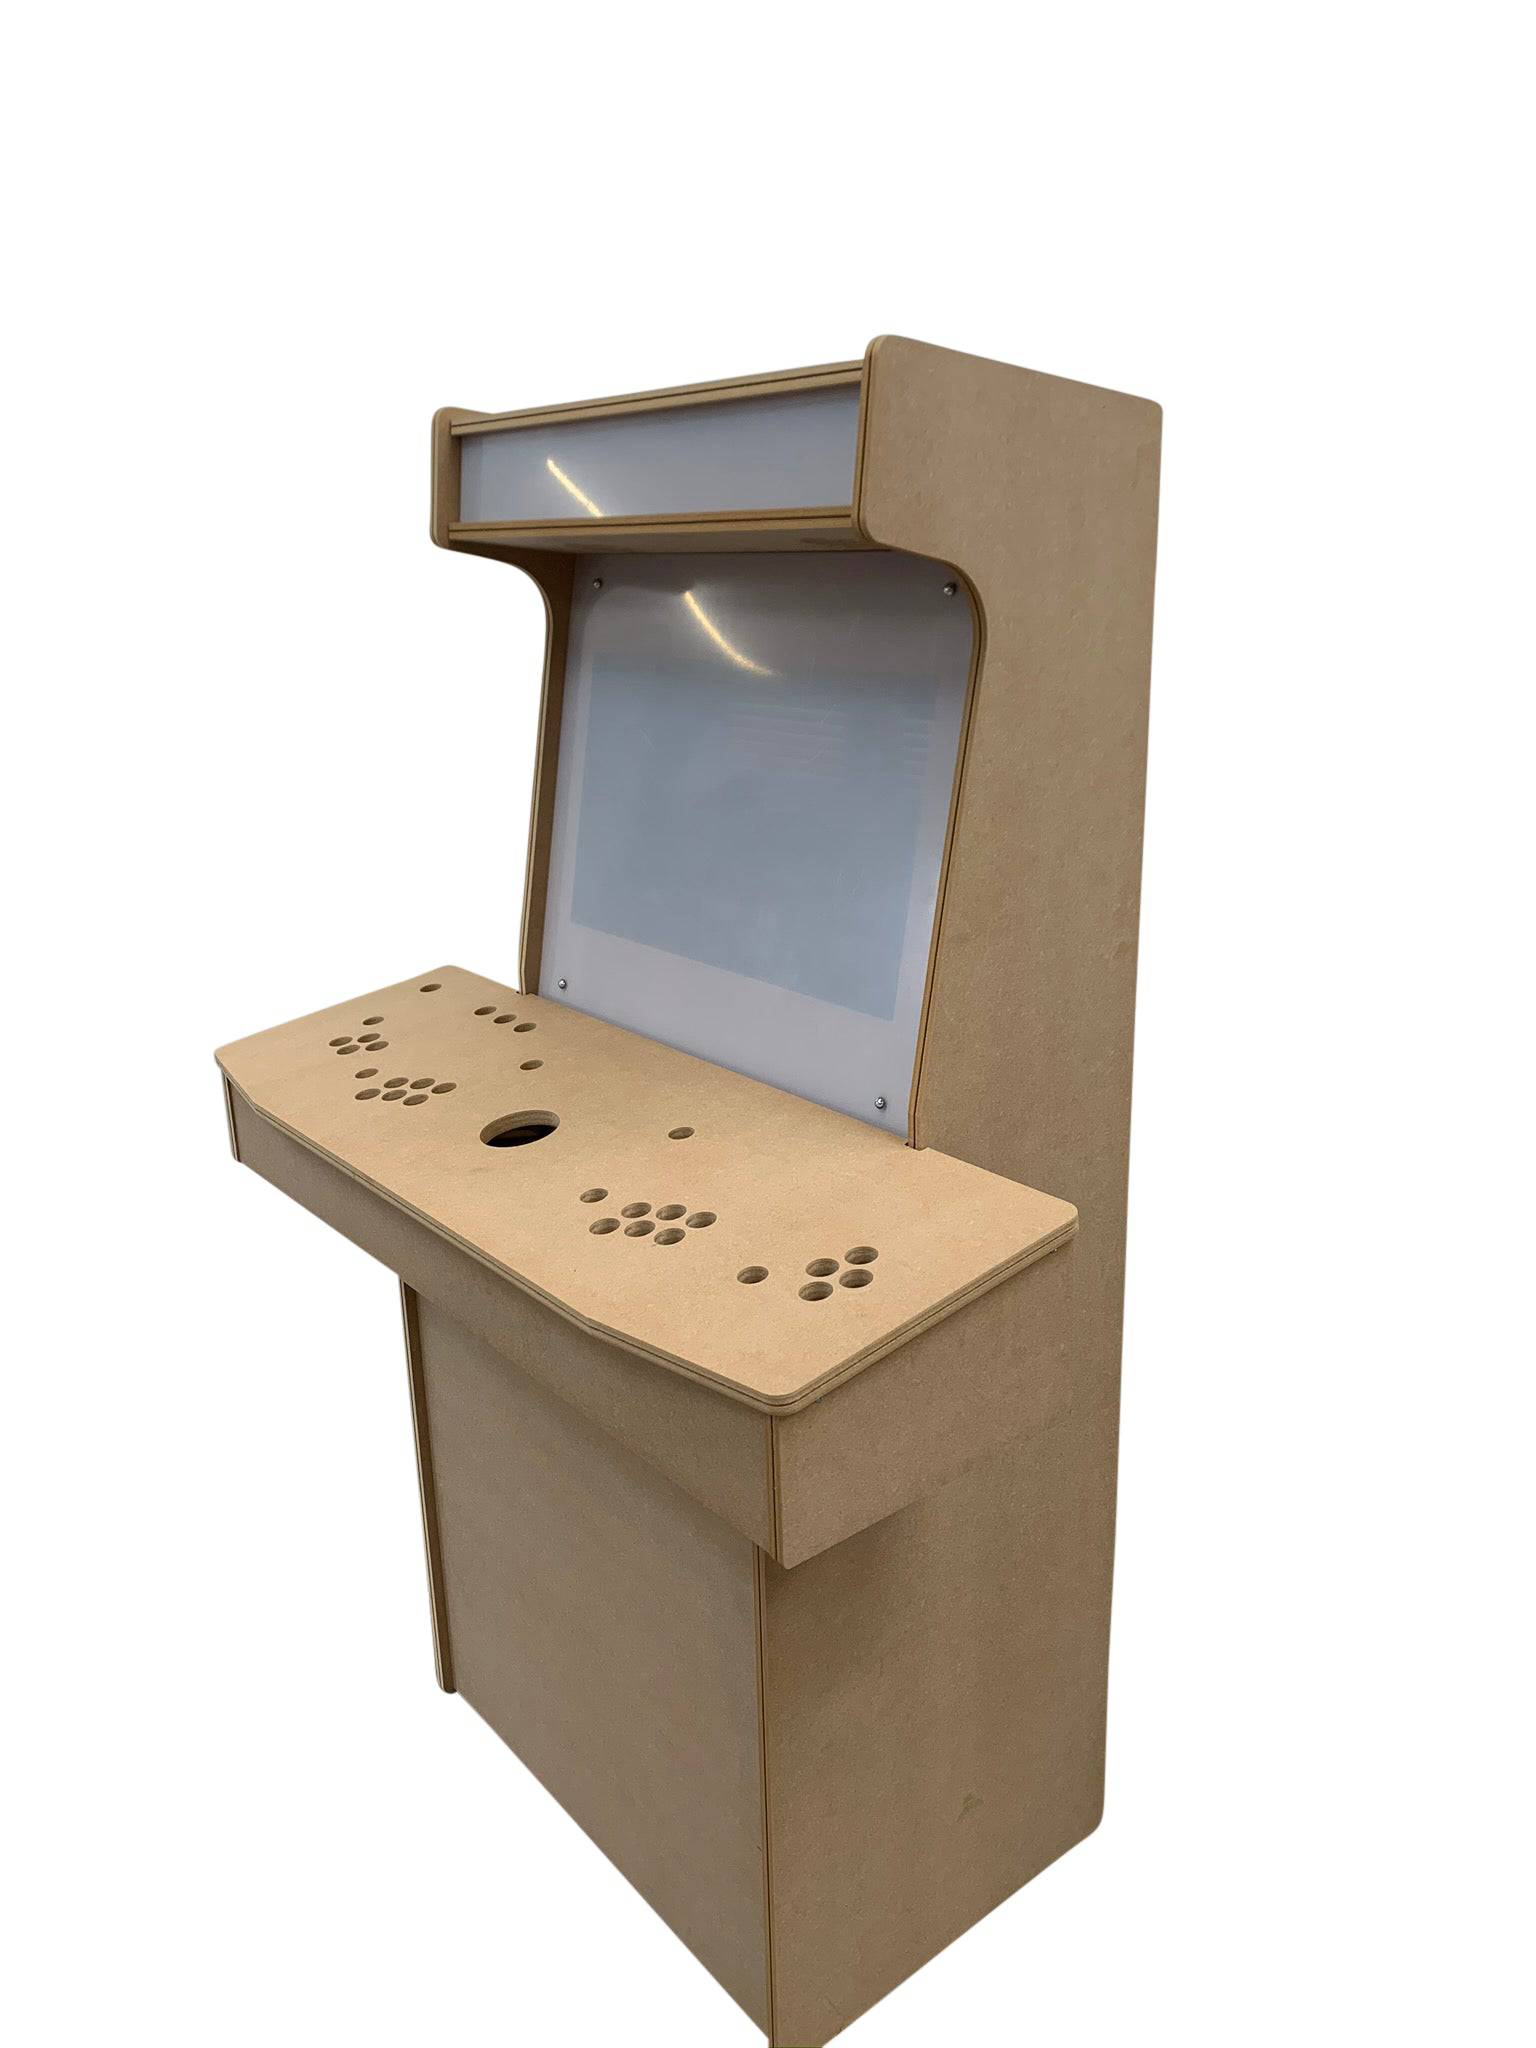 27" Upright 4 Player Arcade Cabinet - Flatout Arcades